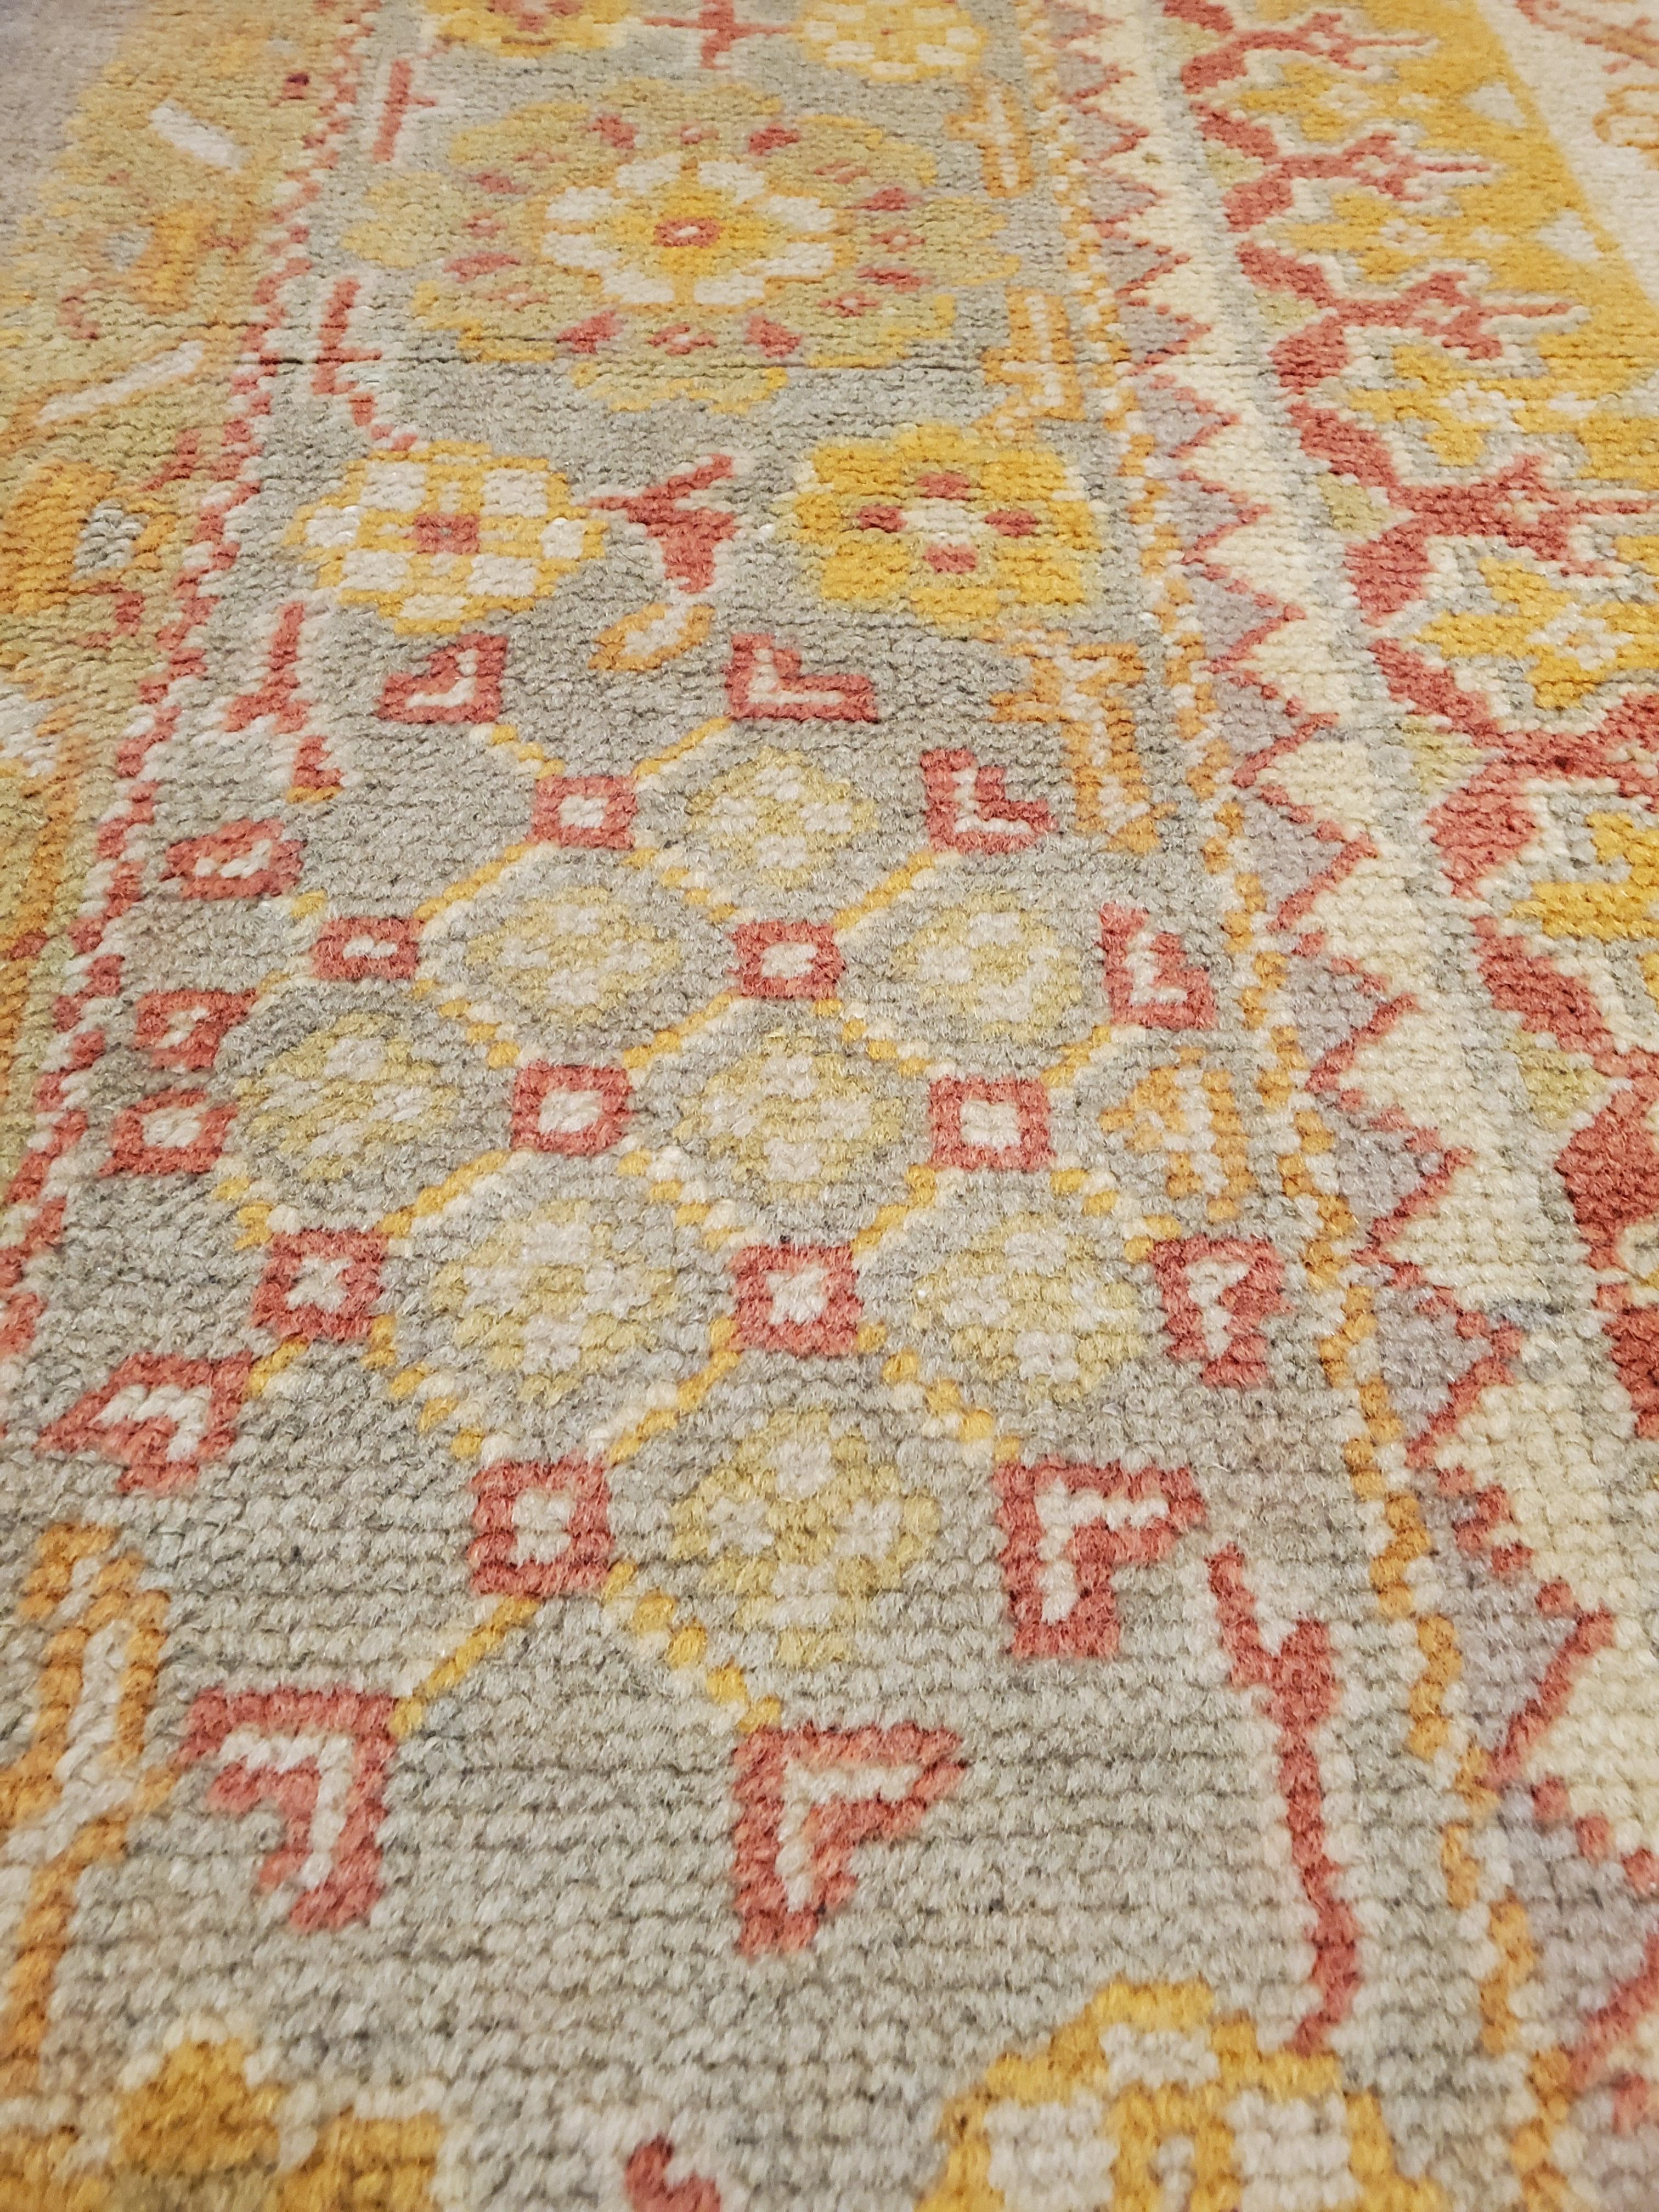 Antique Turkish Oushak Carpet, Handmade Oriental Rug, Gray, Taupe, Saffron Coral 10